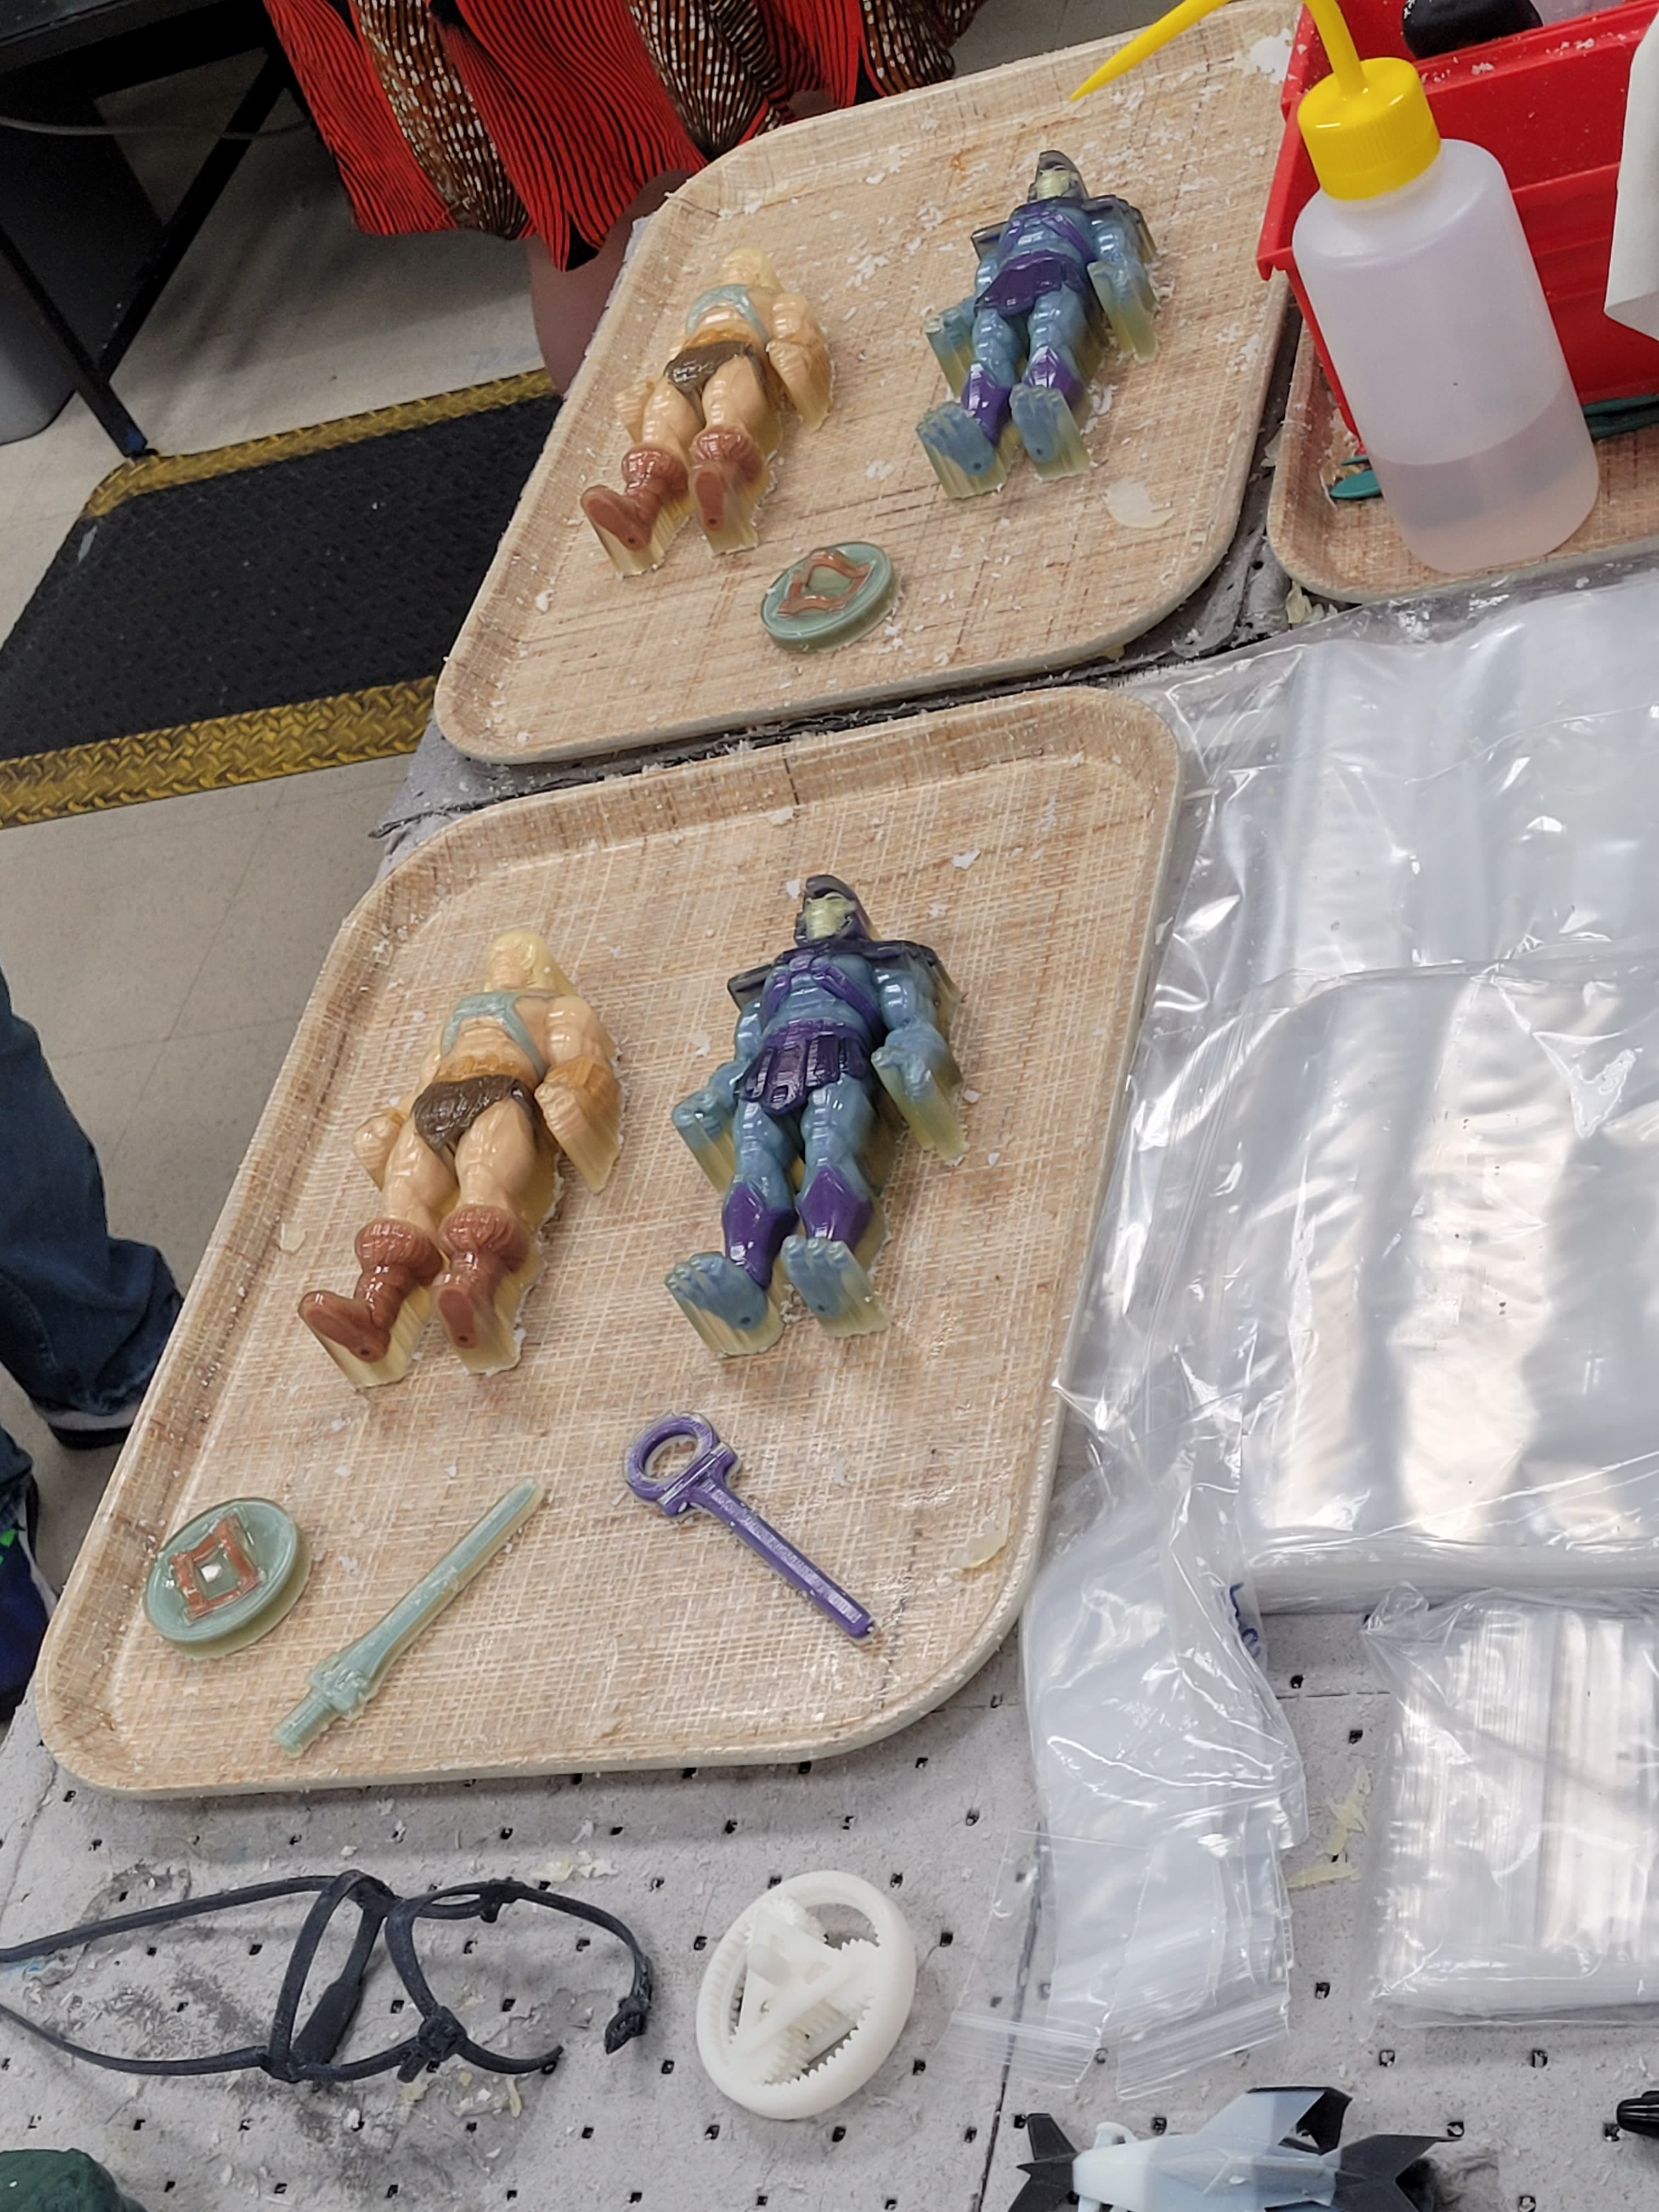 3D printed figures